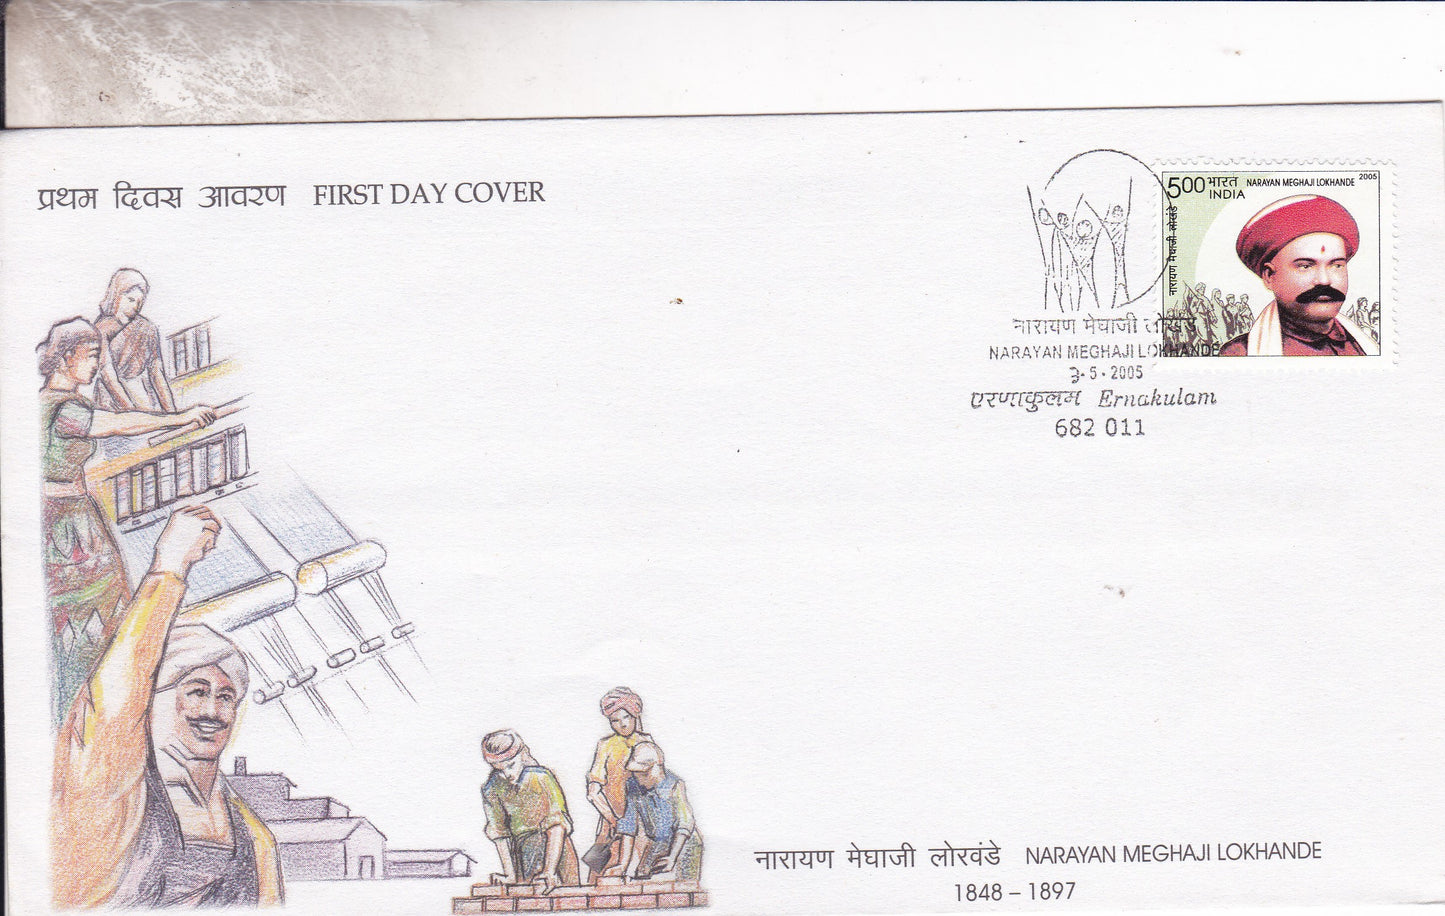 भारत नारायण मेघाजी लोखंडे एफडीसी-2005